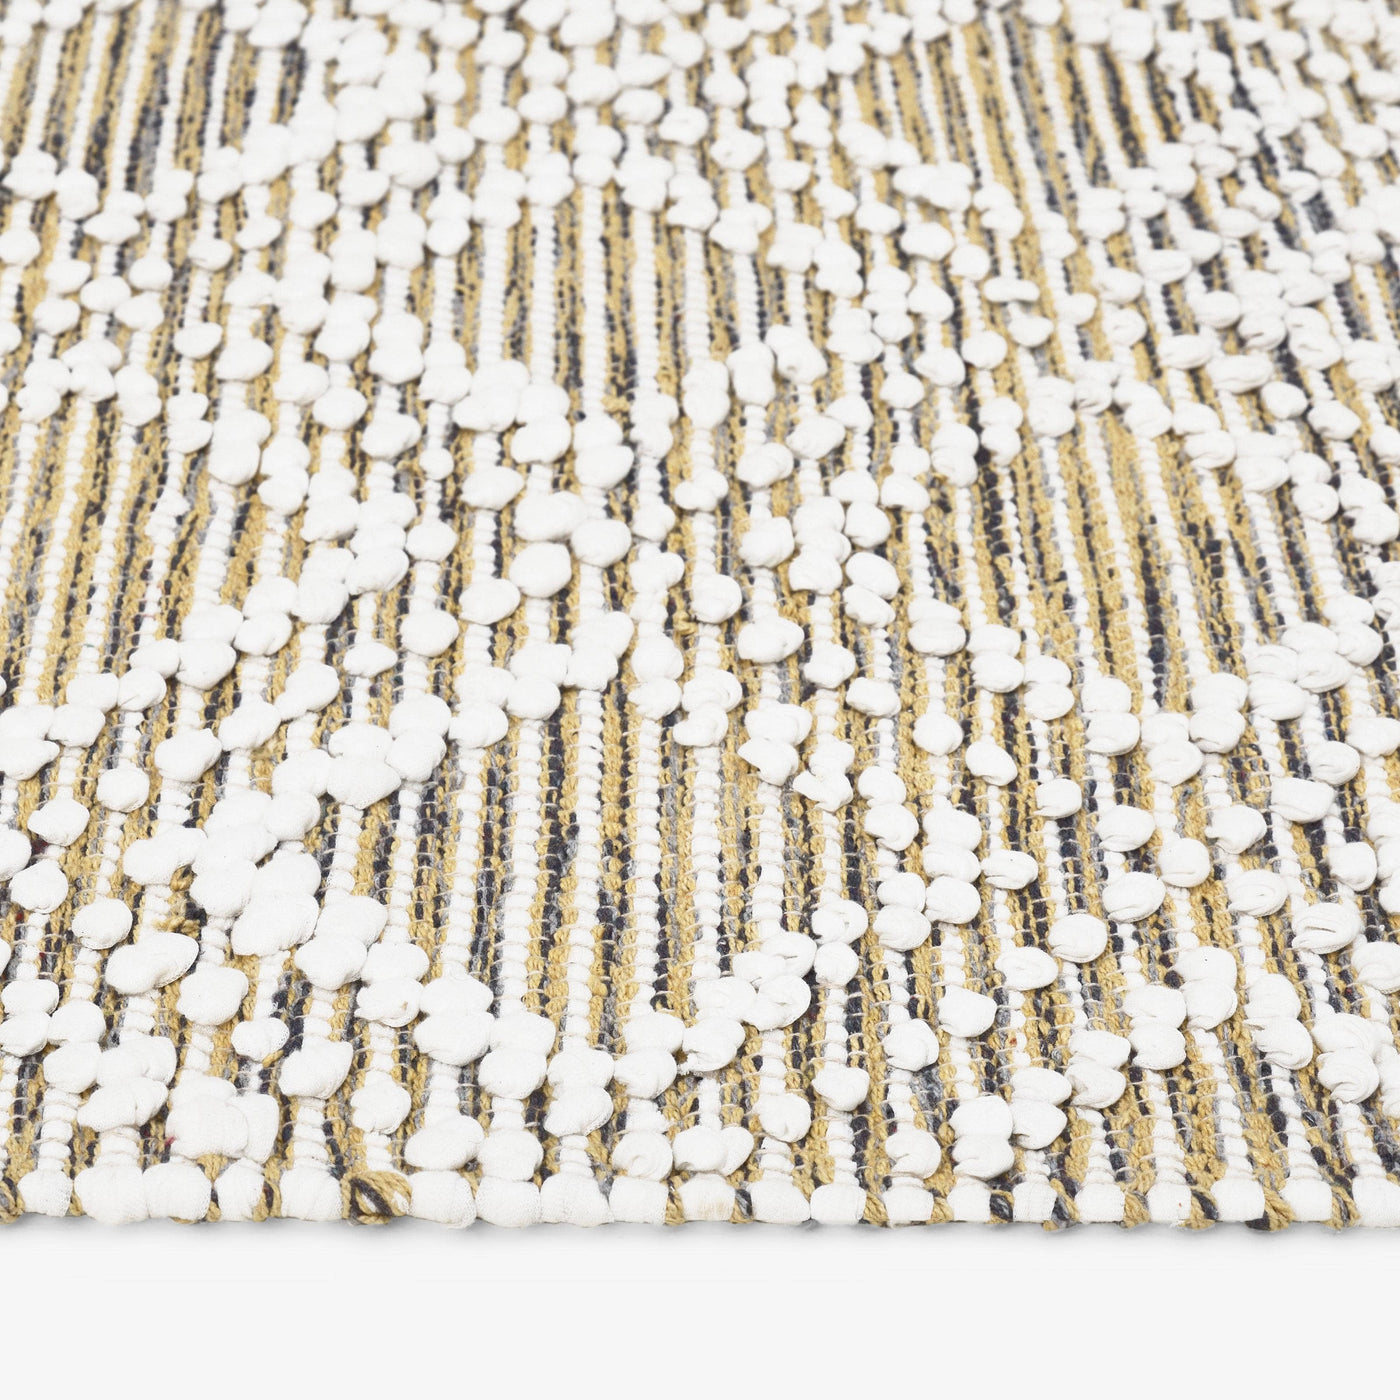 Sullivan Handwoven Geometric Rug, Mustard - White, 120x180 cm Modern Rugs sazy.com